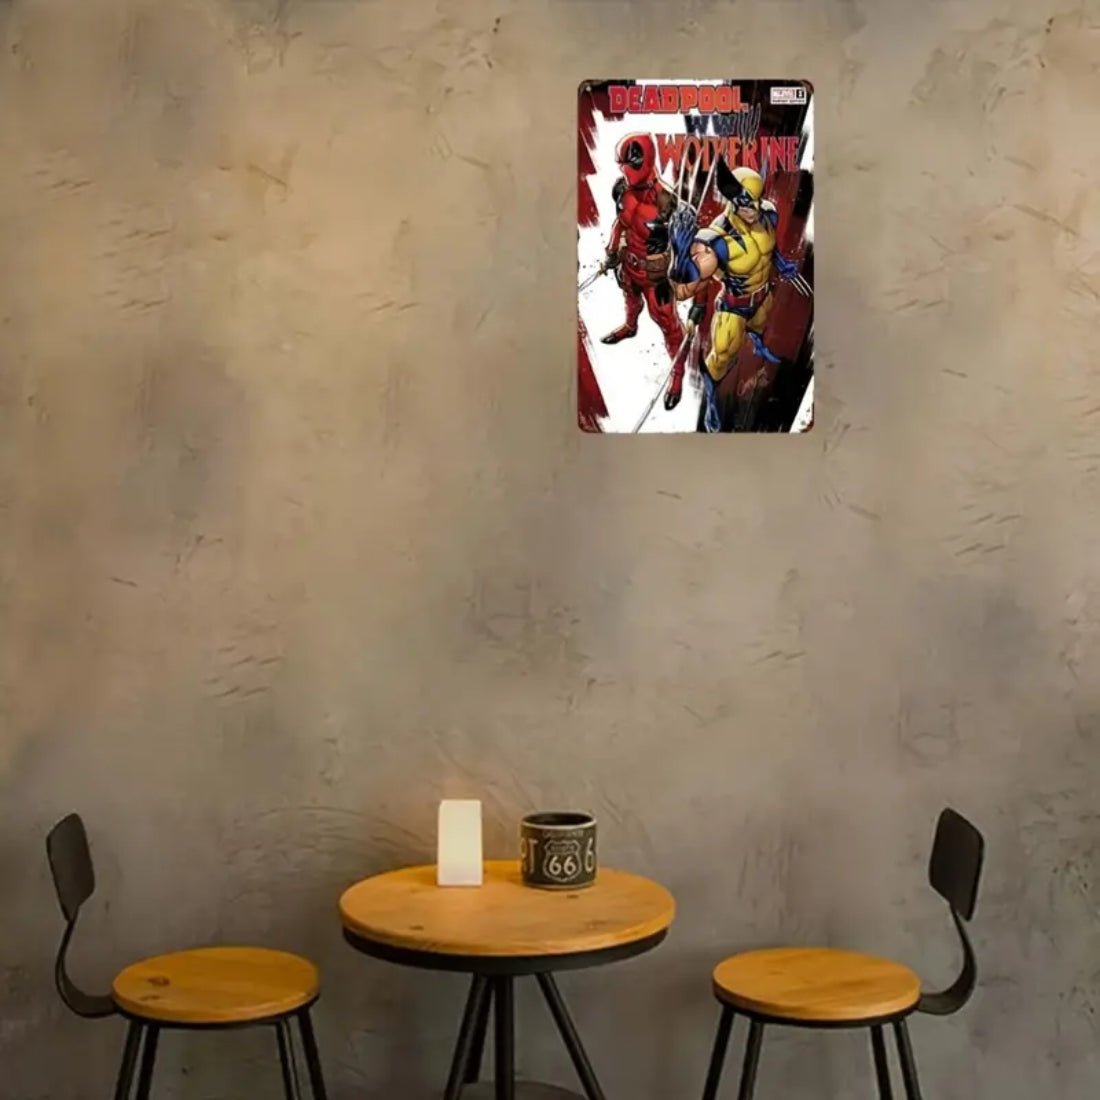 Marvel Deadpool vs Wolverine Aluminum Sign (20x1x30cm) - ملصق - Store 974 | ستور ٩٧٤